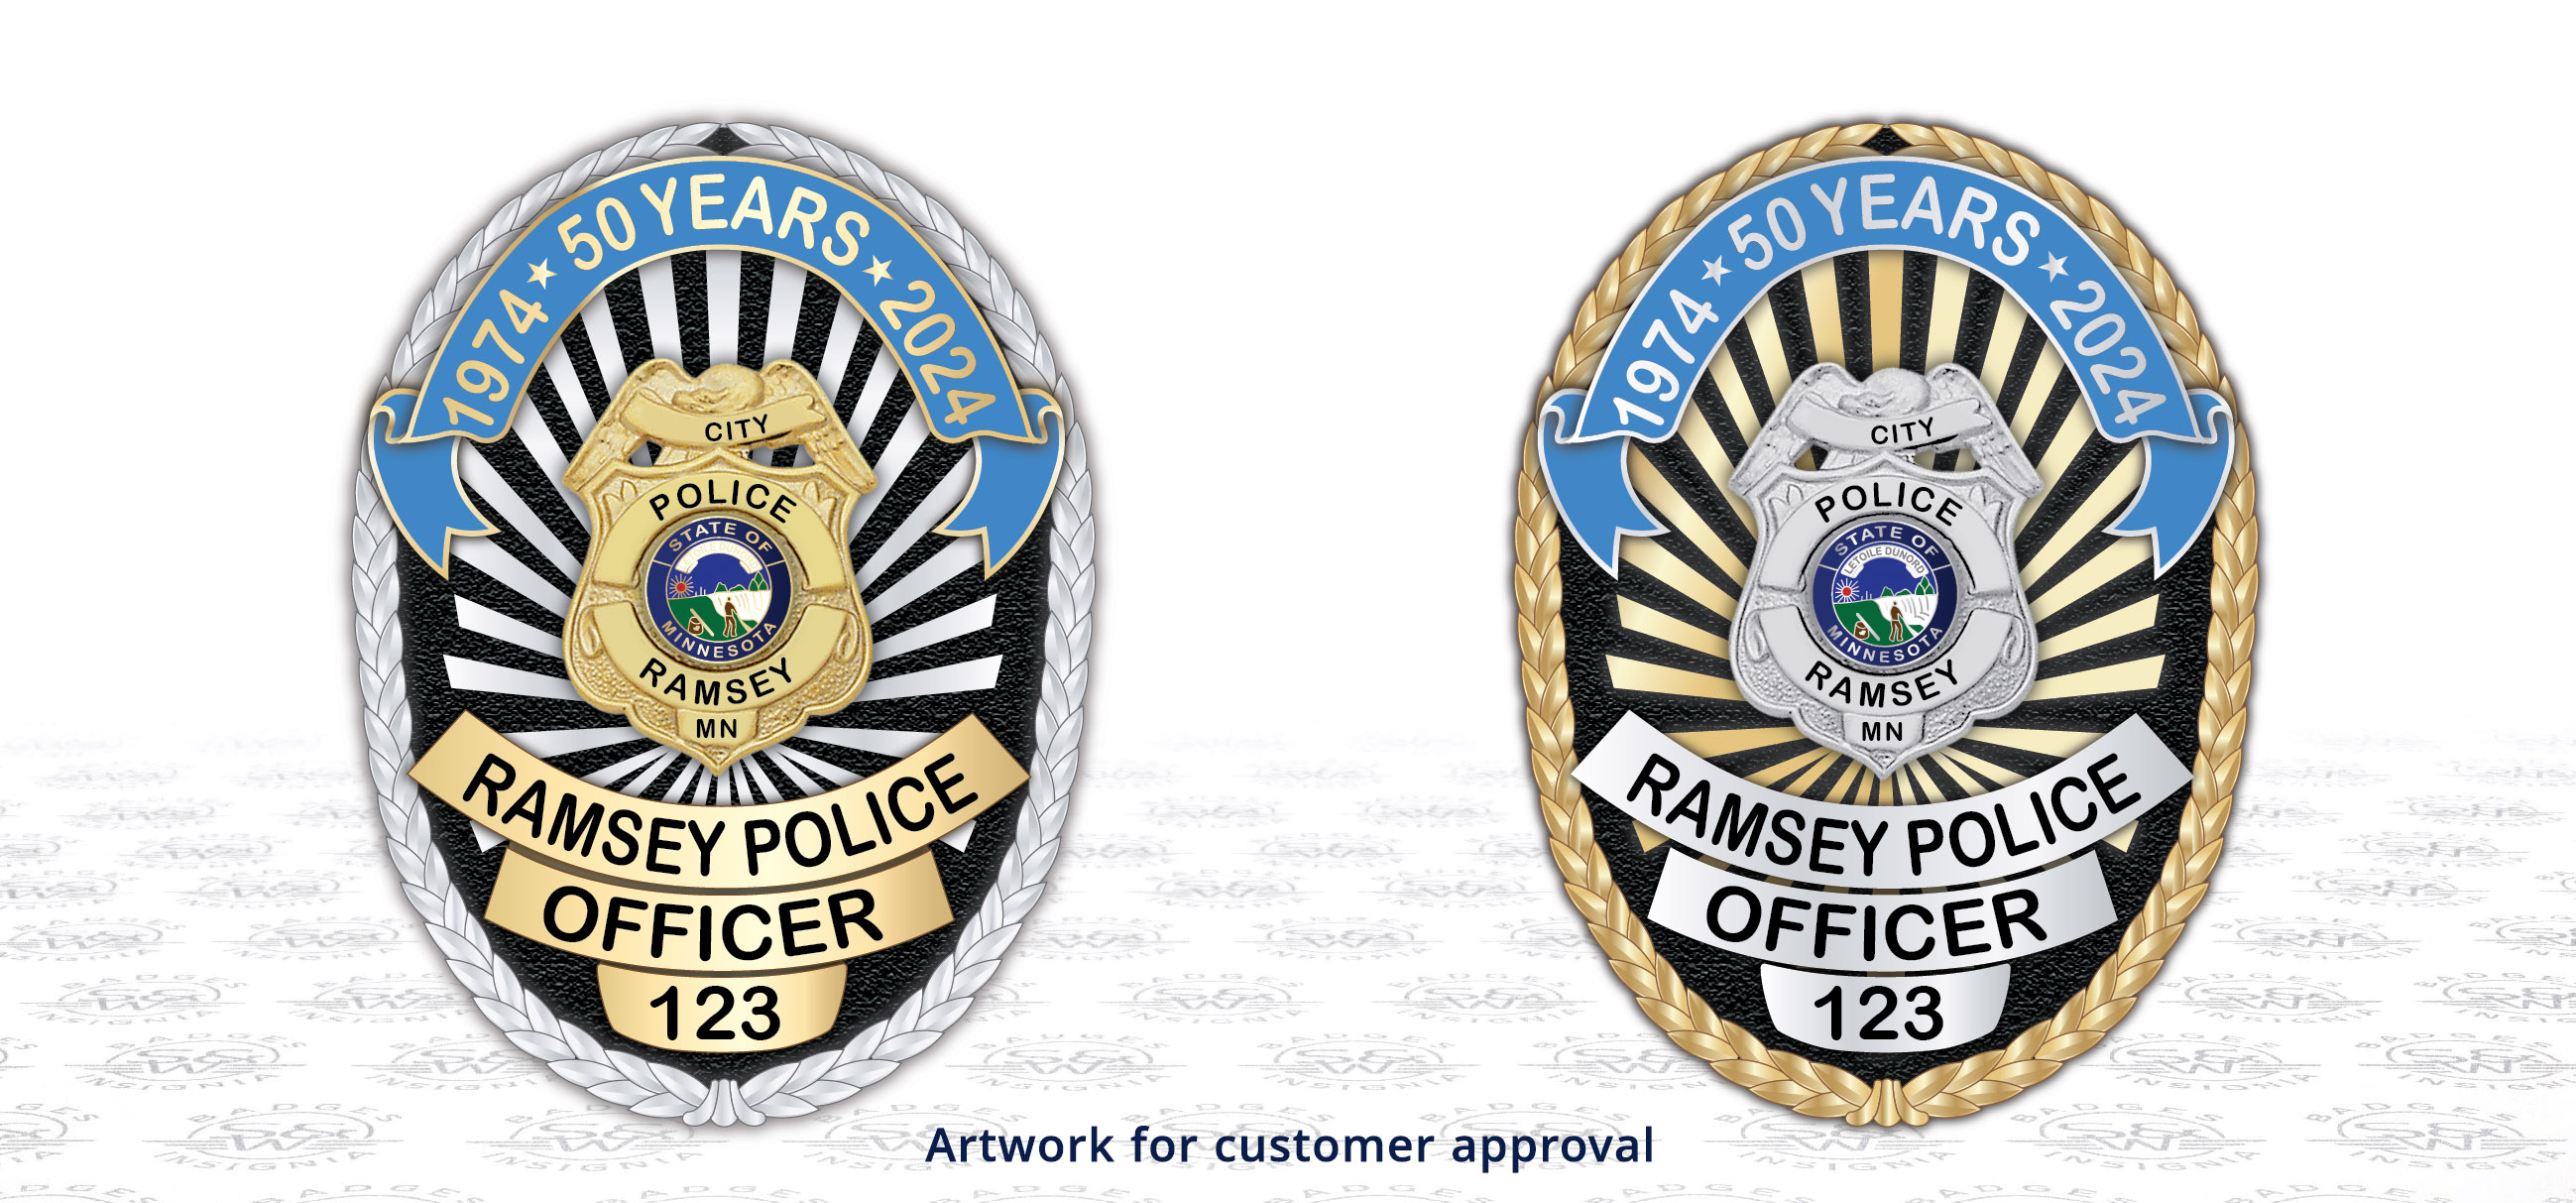 Ramsey Police Department Anniversary badge artwork done in vector format